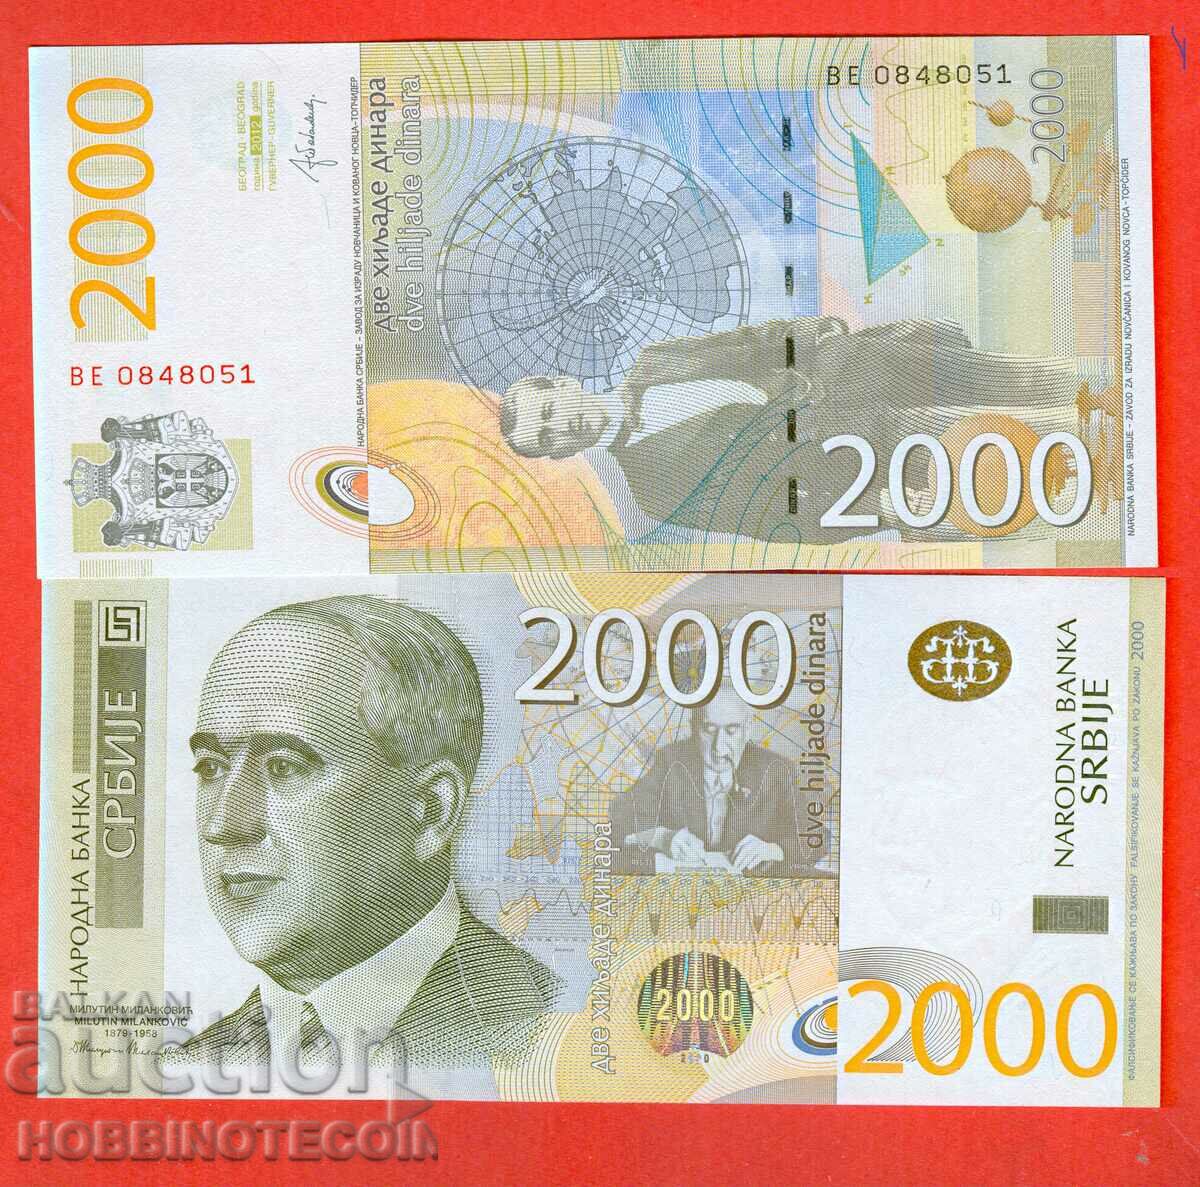 SERBIA SERBIA 2000 - 2,000 Dinars issue 2012 NEW UNC